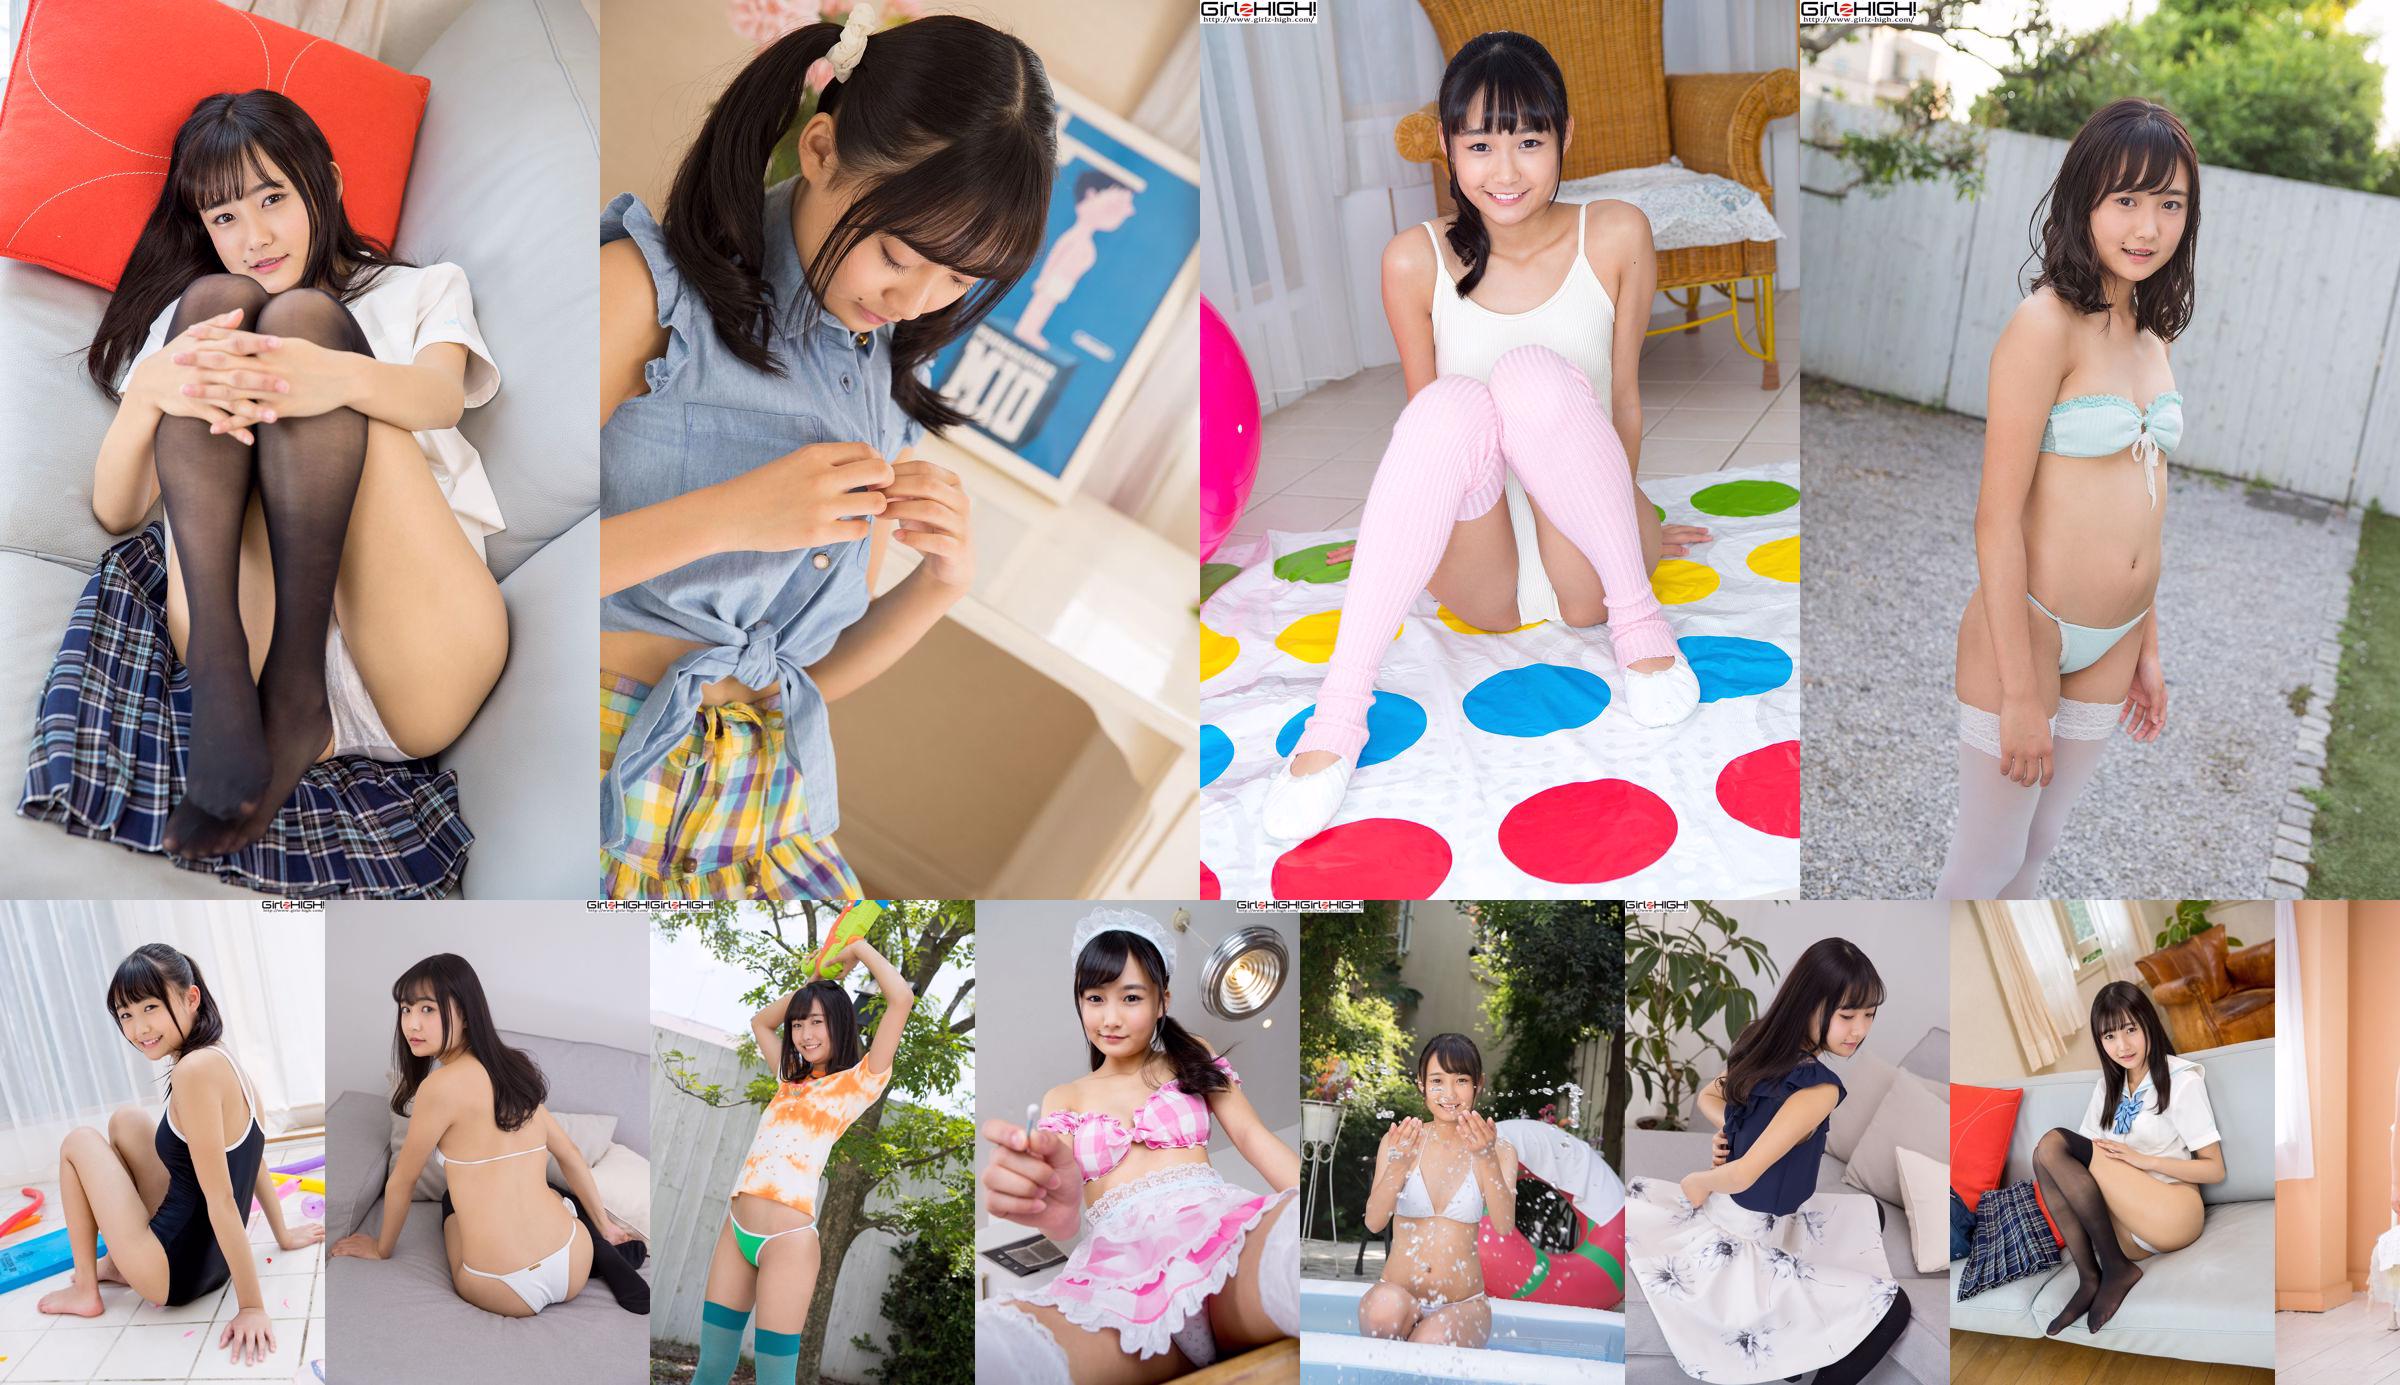 Nishino Hanakoi "Pretty Girl School" uniform launch [Girlz-High] No.dffe4b Page 3